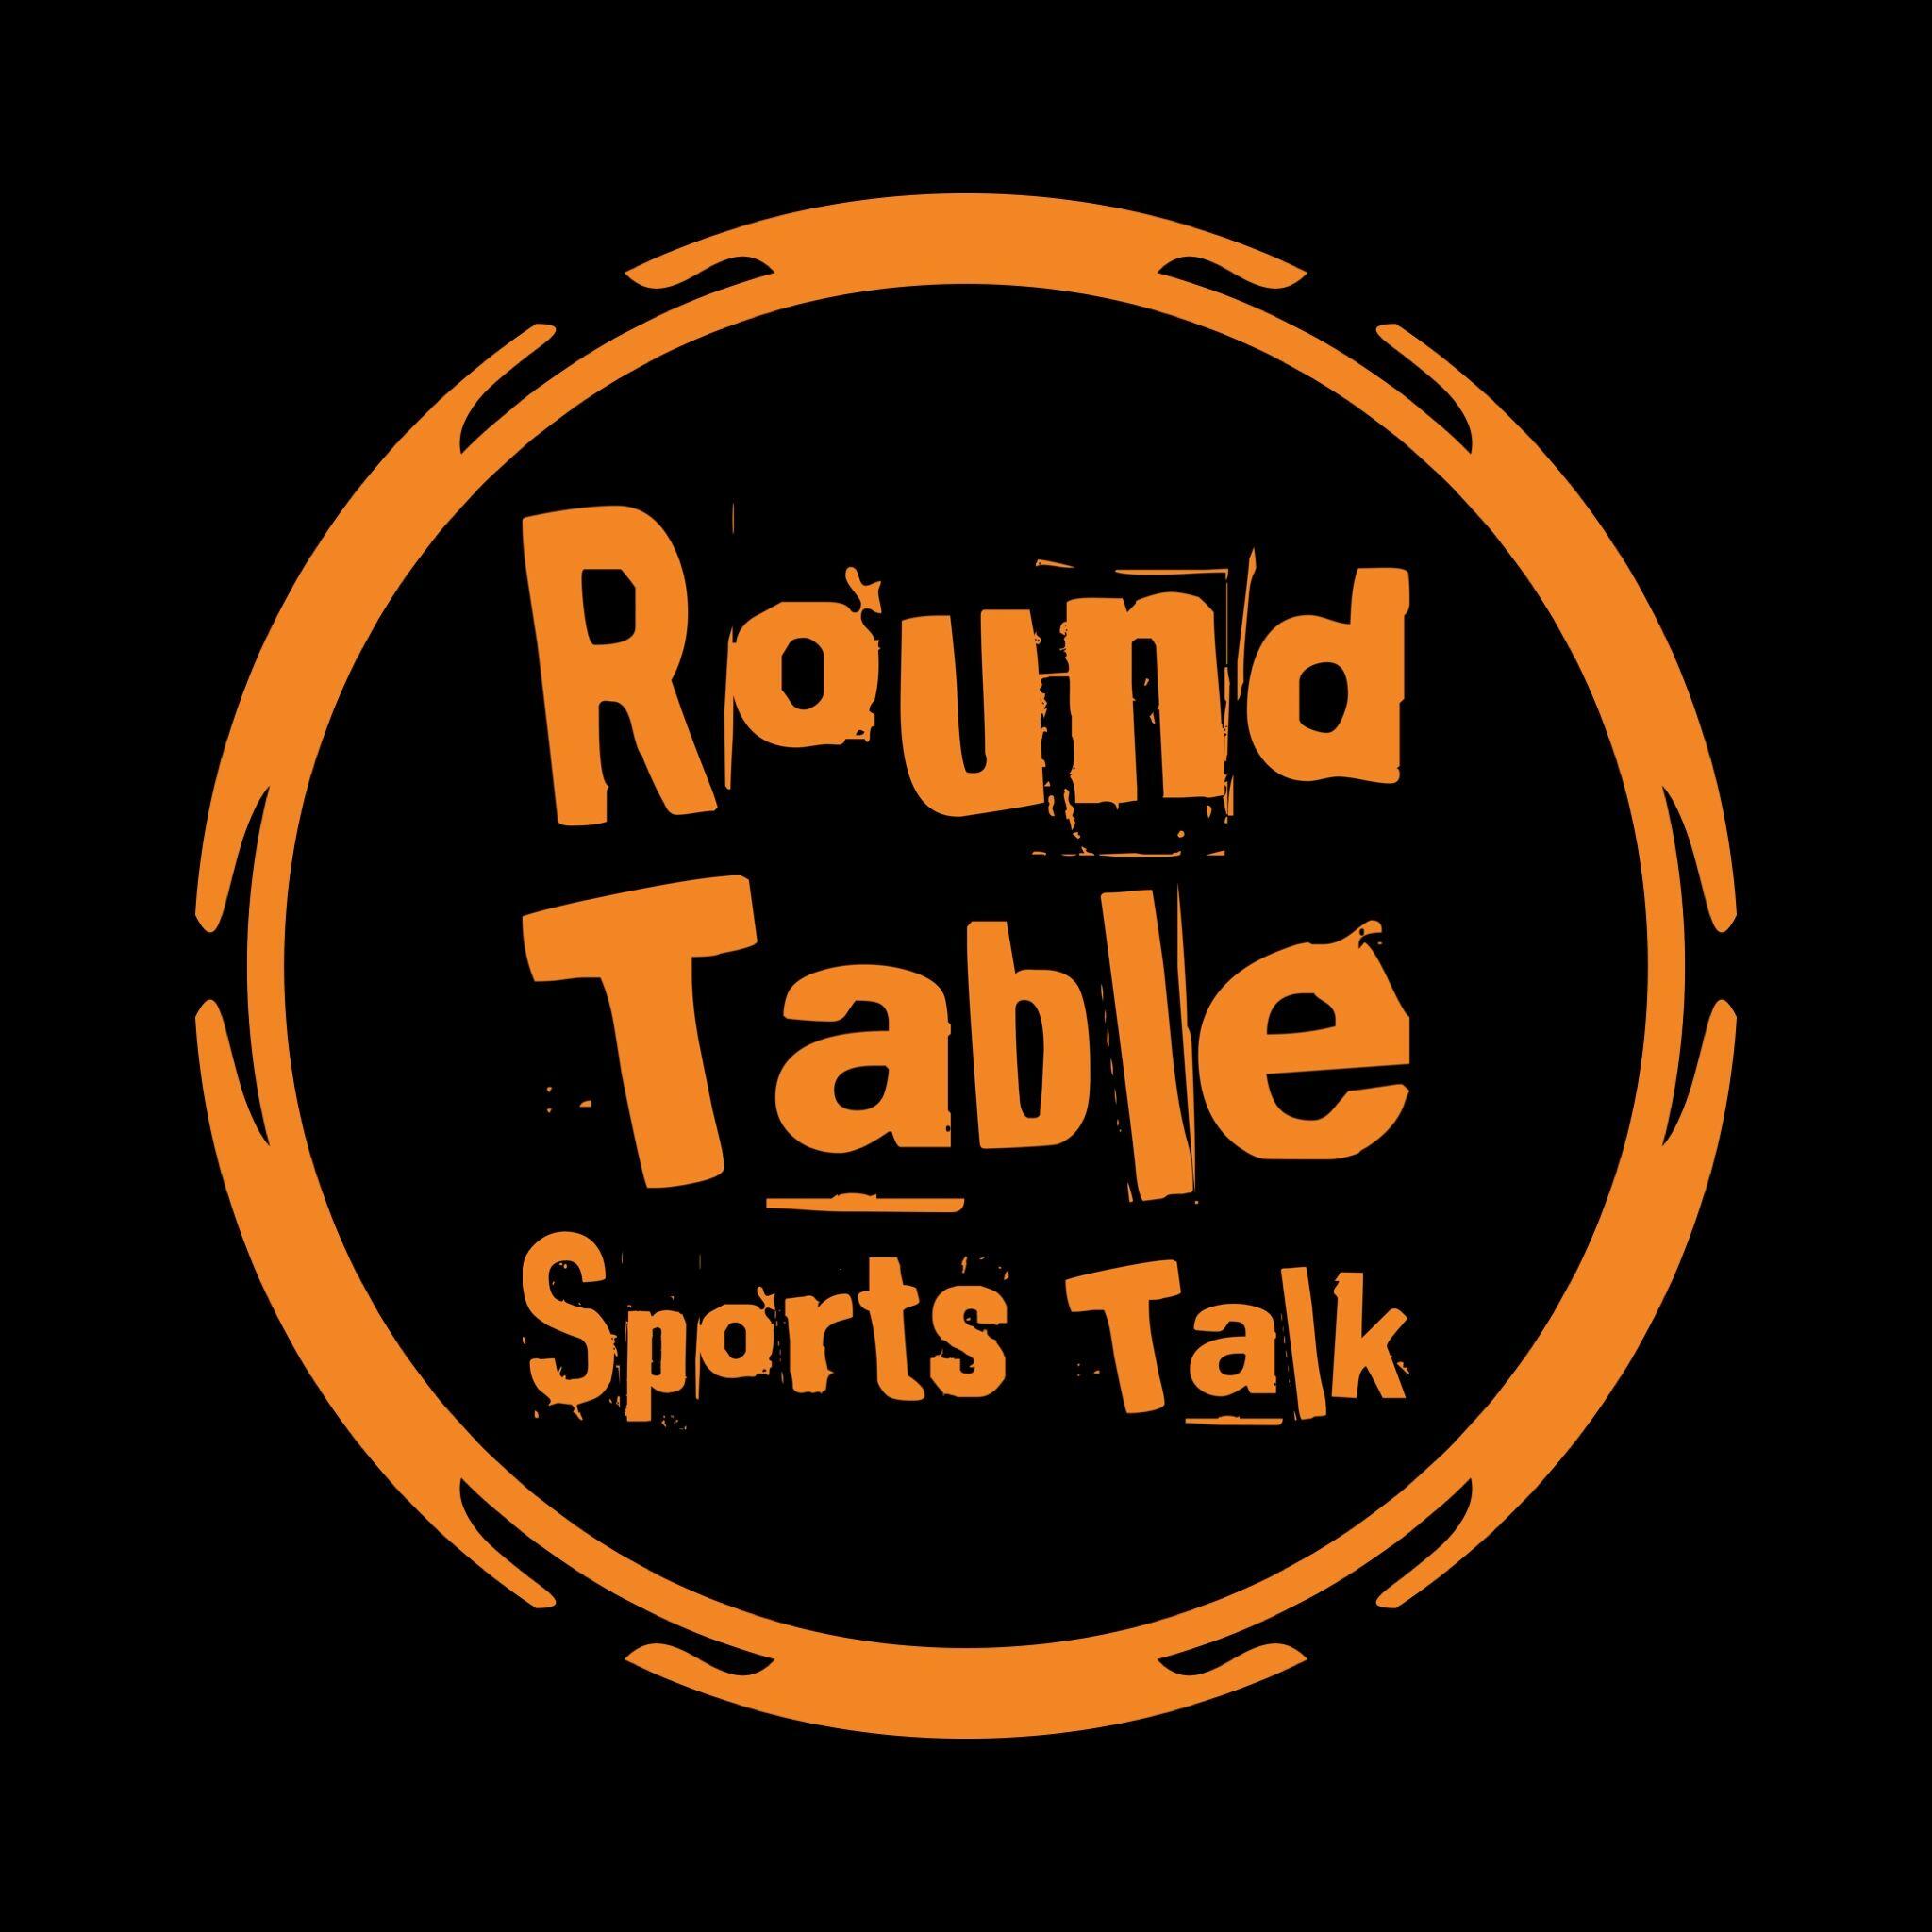 Talking round. Talk Round. First Round. The game Design Round Table Podcast.